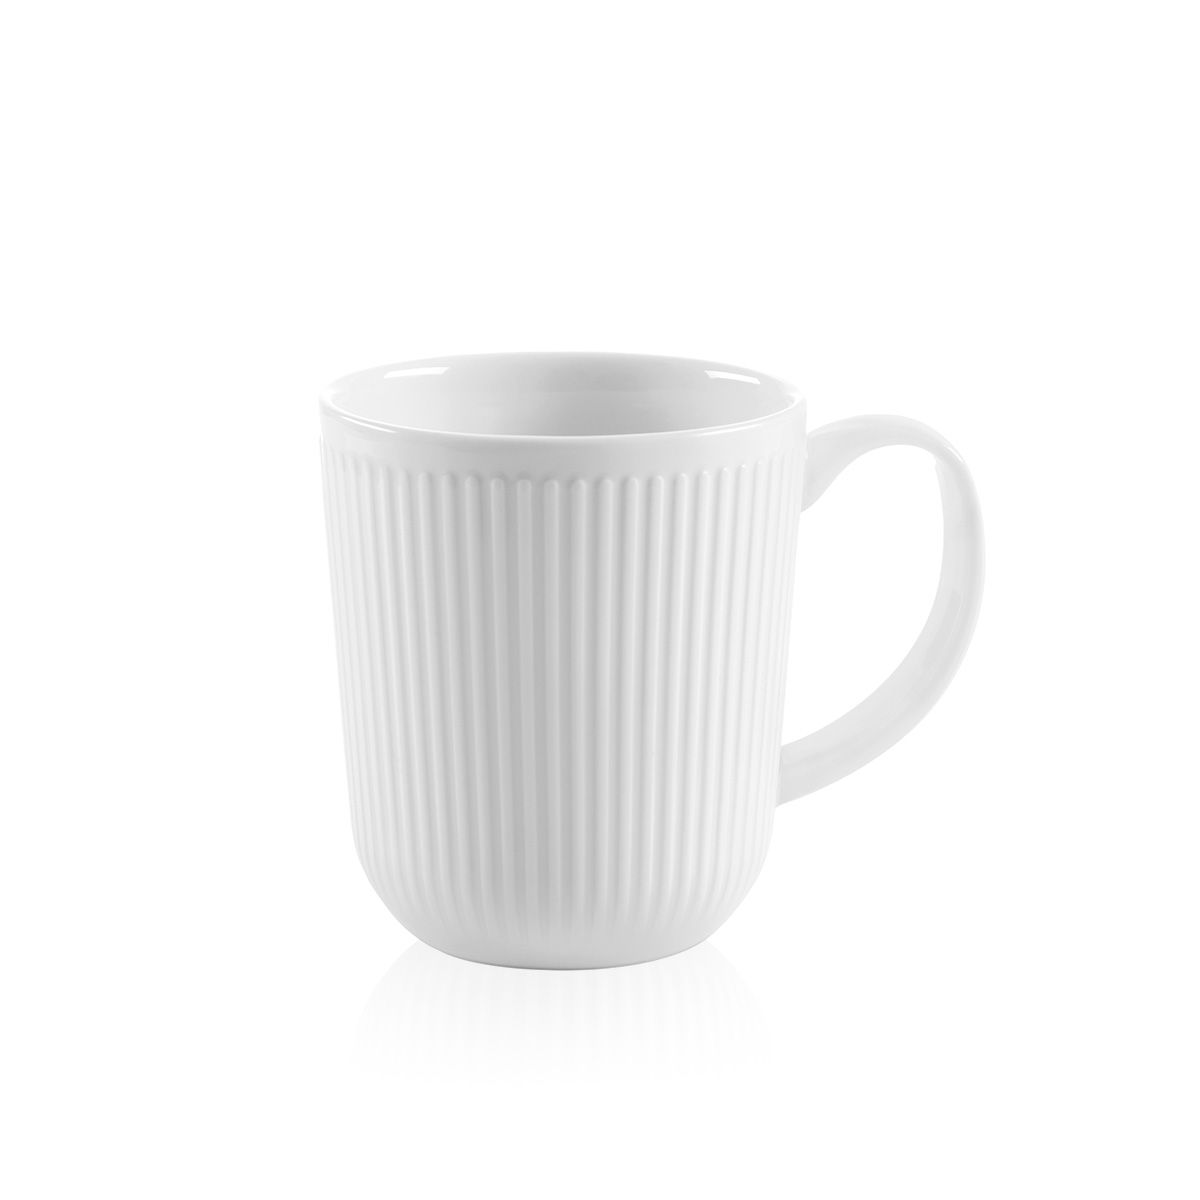 Bodum Douro Coffee Mug Porcelain White, 2 Pcs.